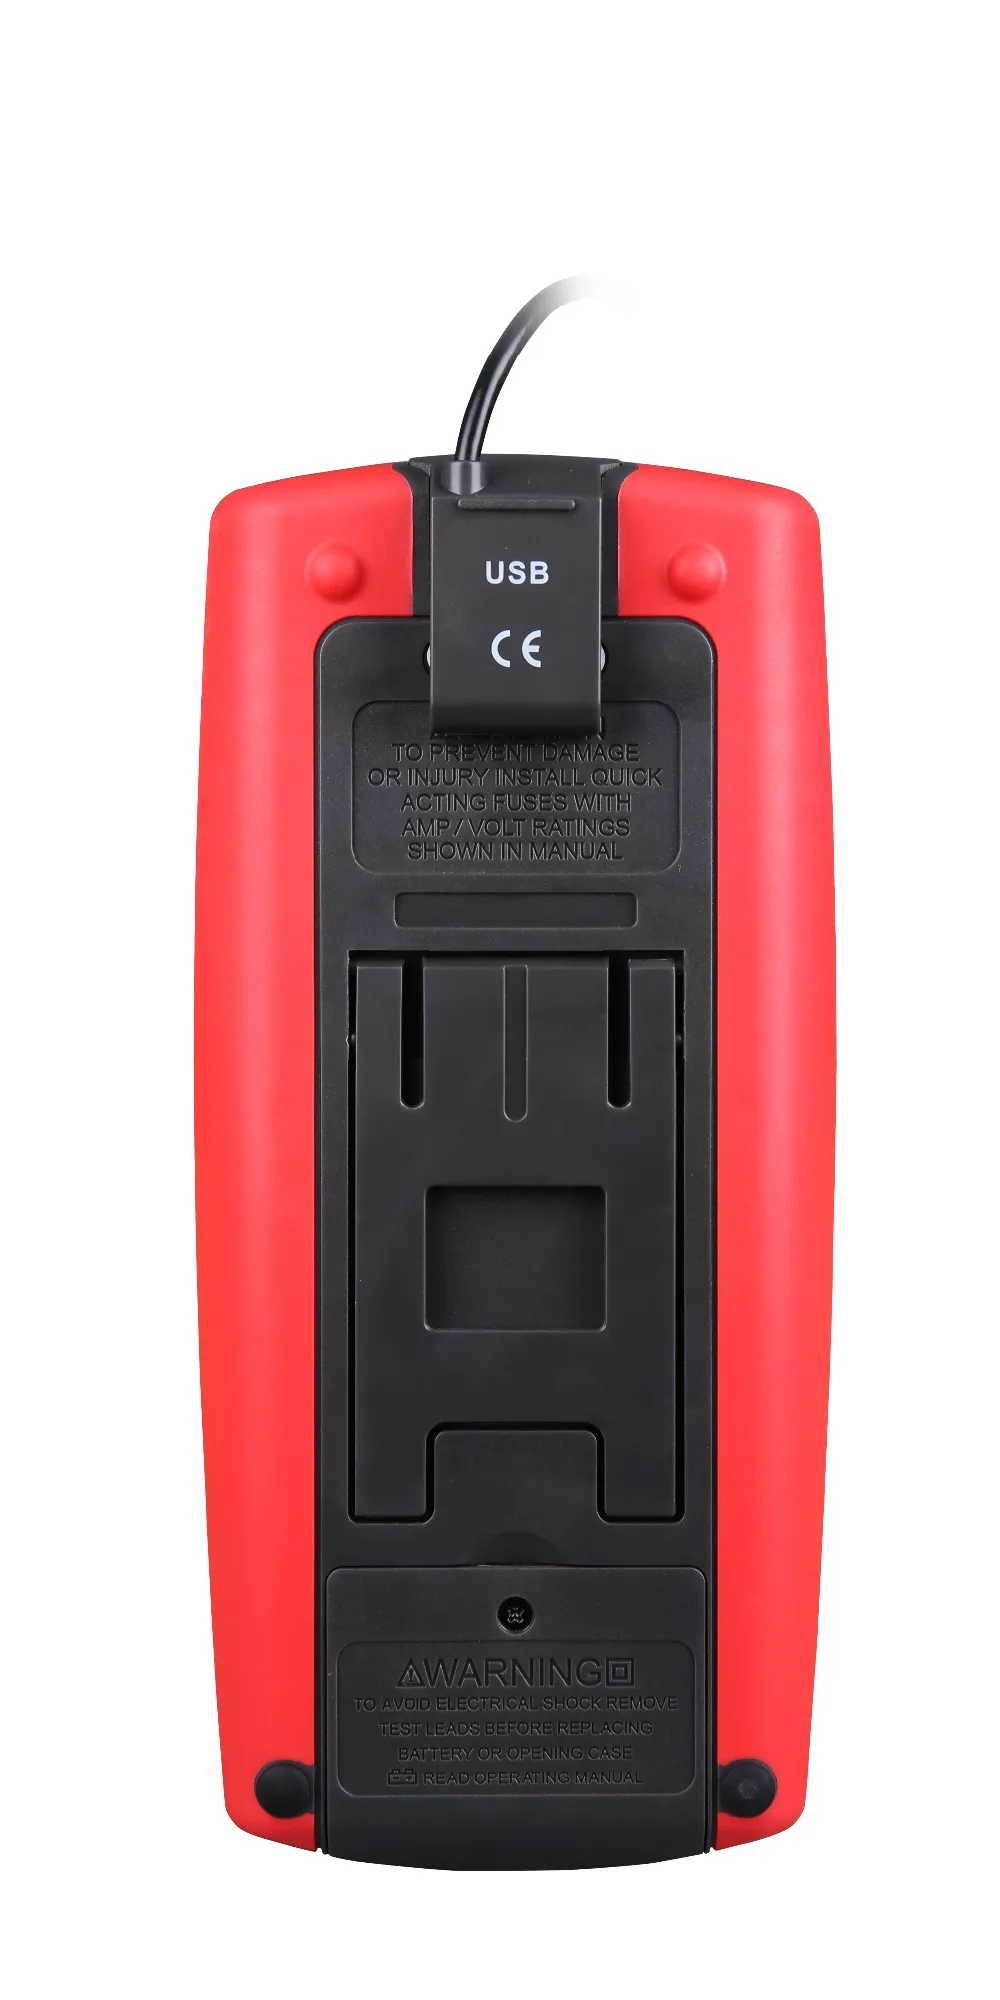 Uni-T UT71B inteligente USB multimetro Digital para RMS verdadeiro